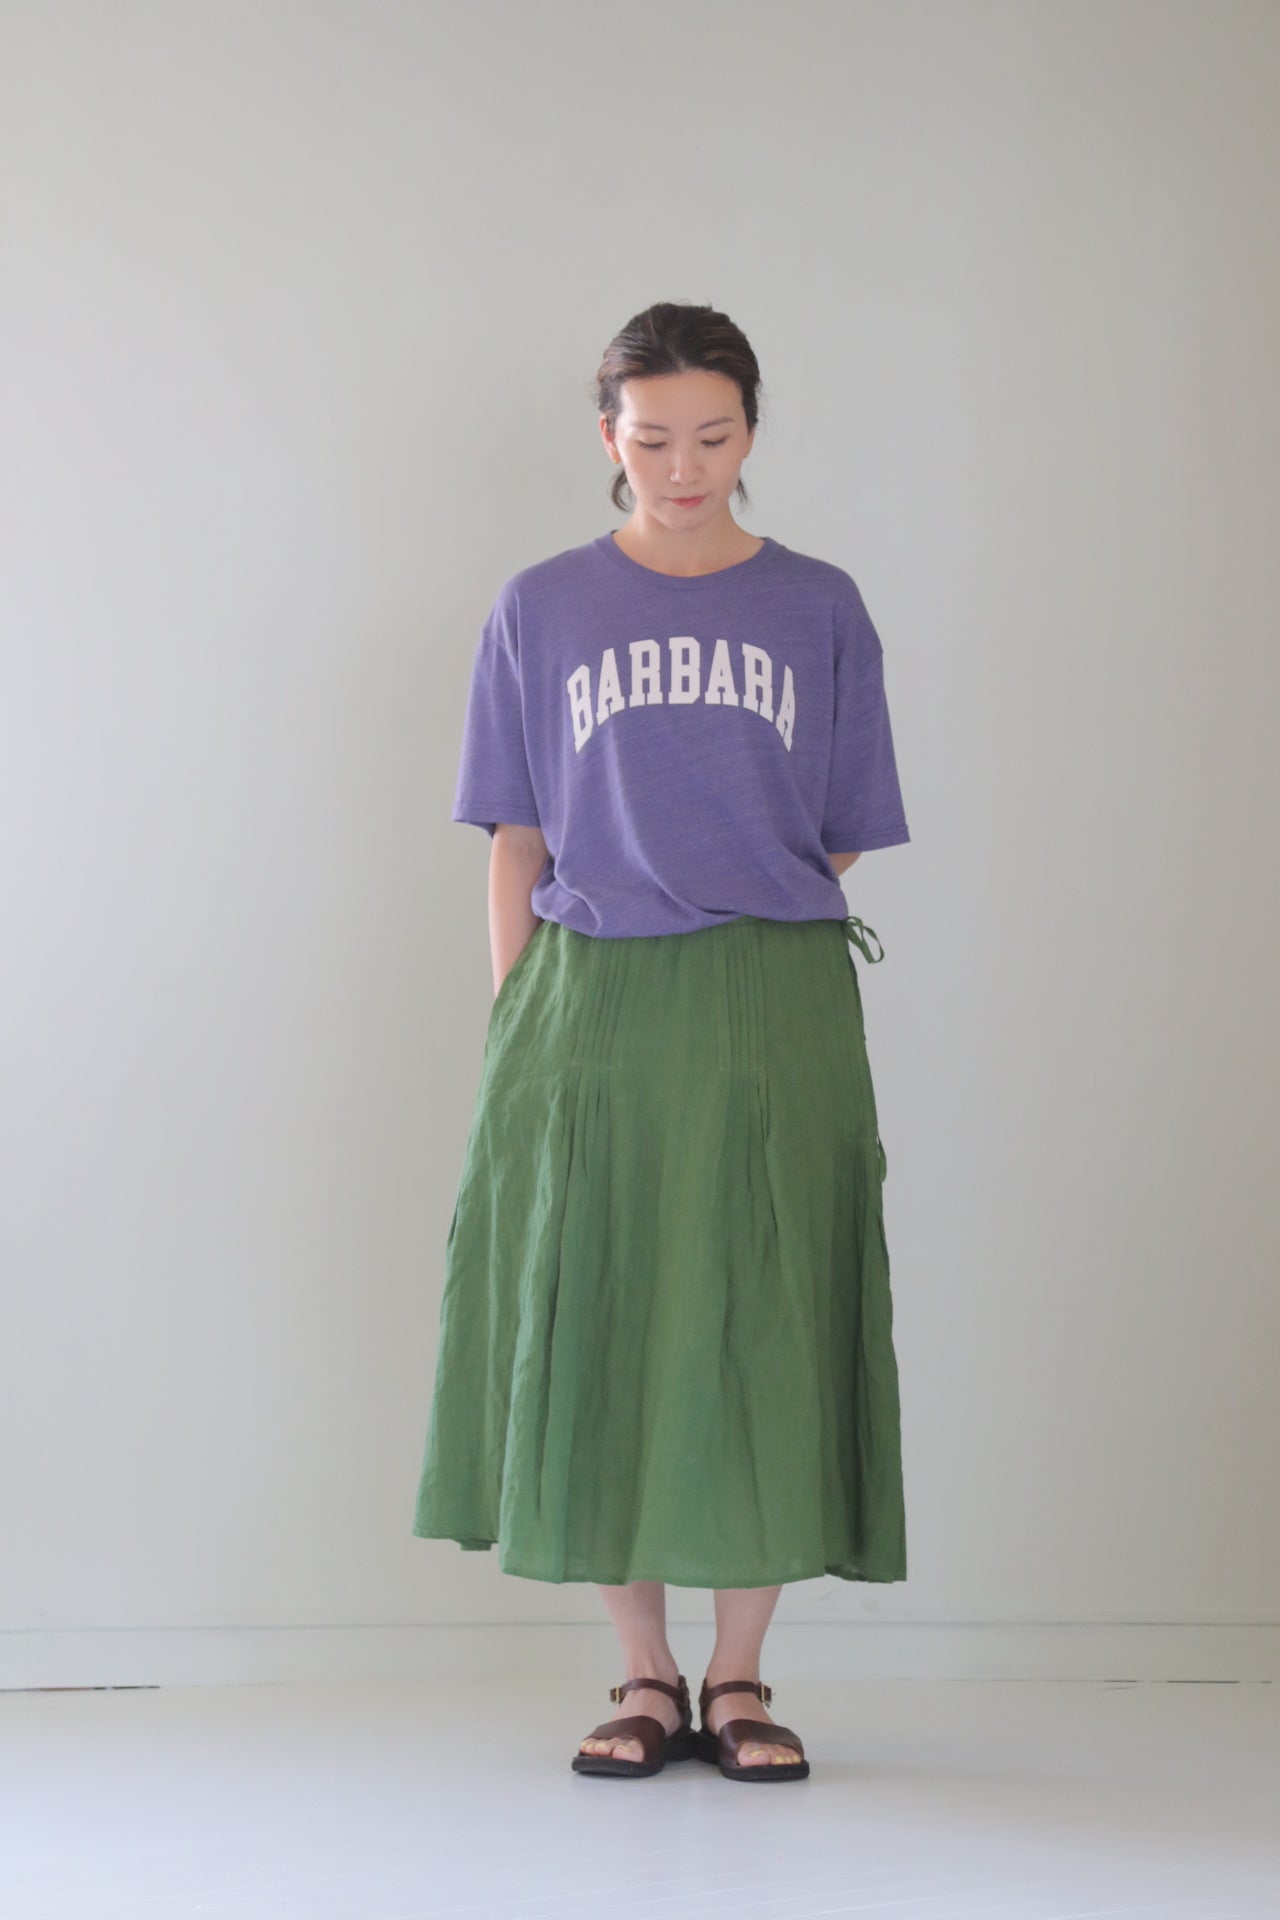 Short sleeve T-shirt/TRI BLEND TEE/BARBARA